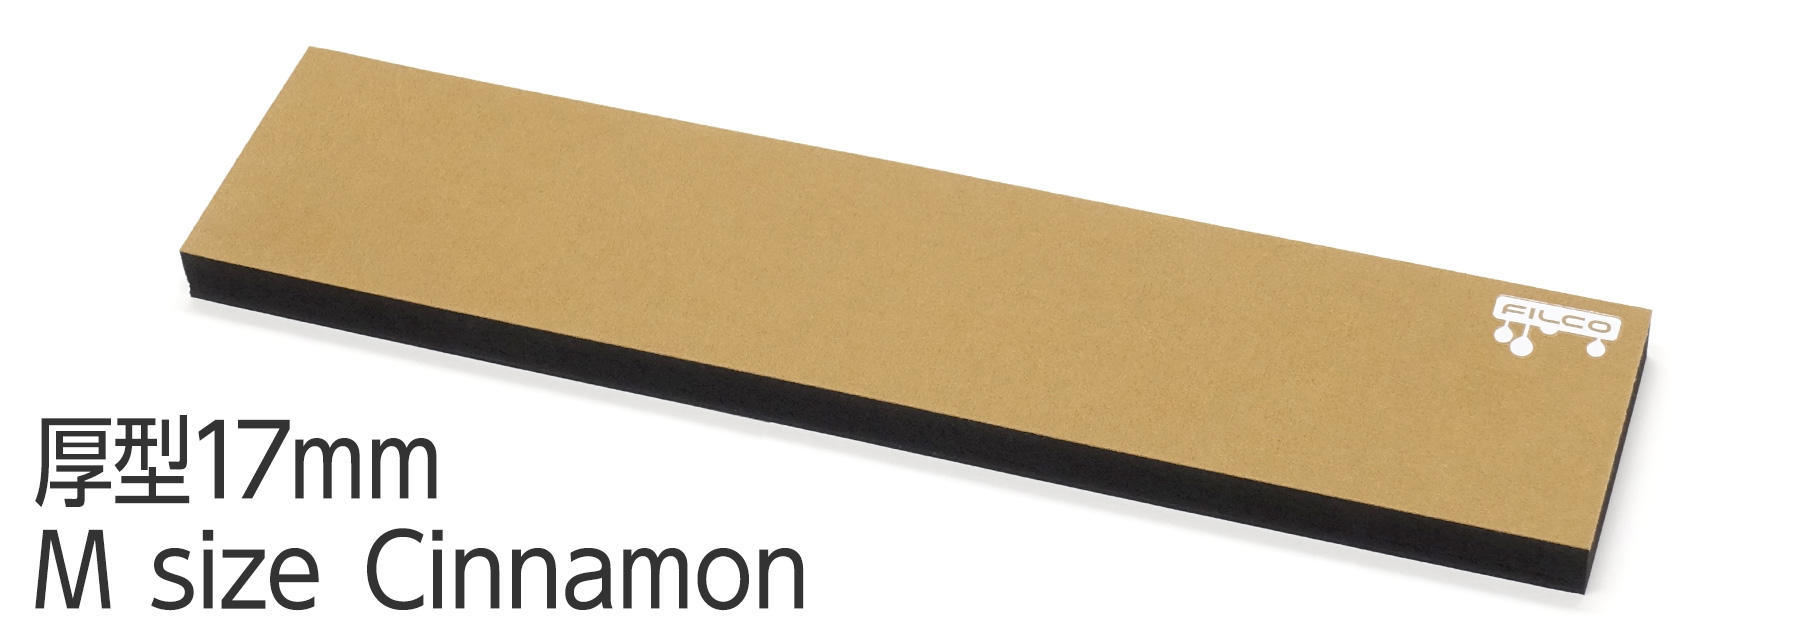 FILCO Majestouch Wrist Rest "Macaron" 厚型17mm・Mサイズ・Cinnamon